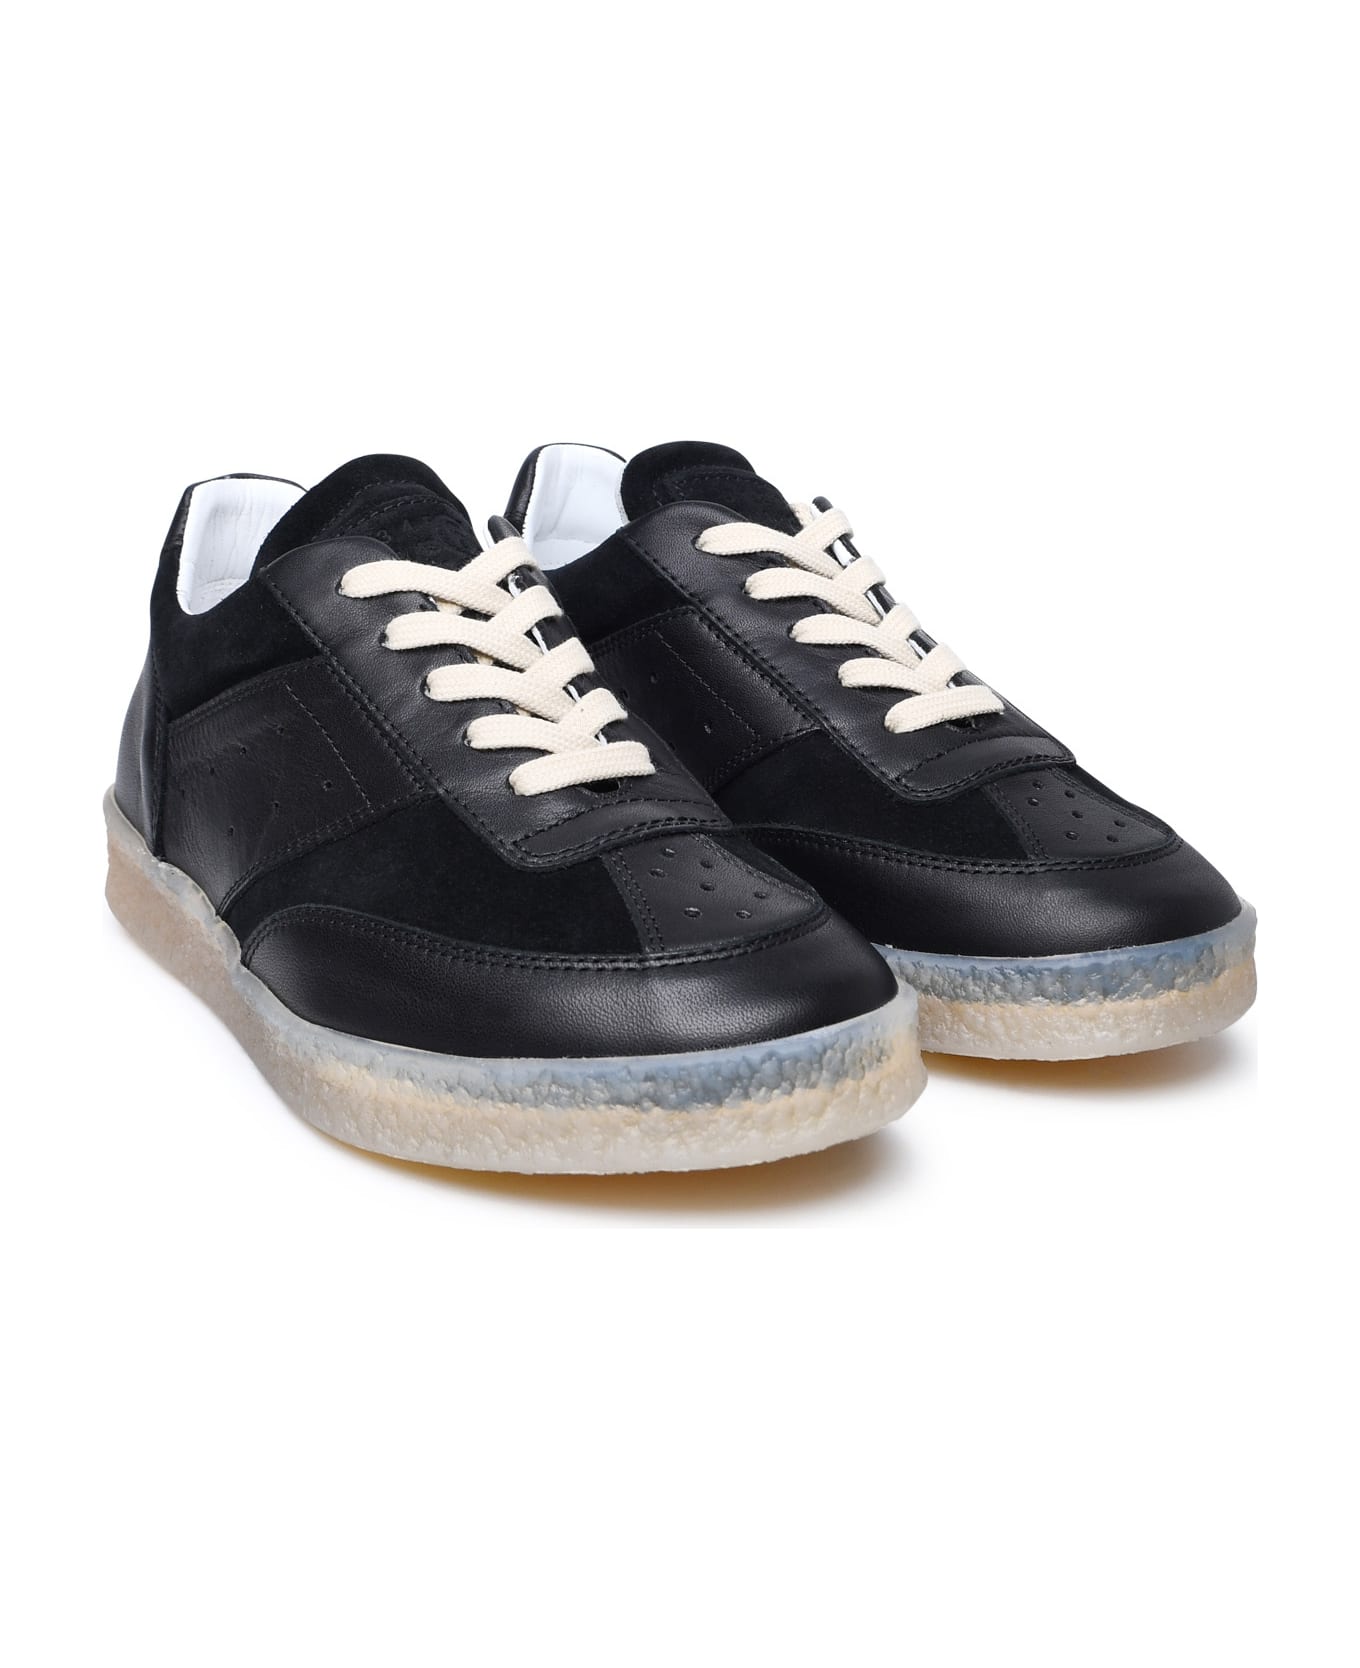 MM6 Maison Margiela Black Leather Sneakers - Black